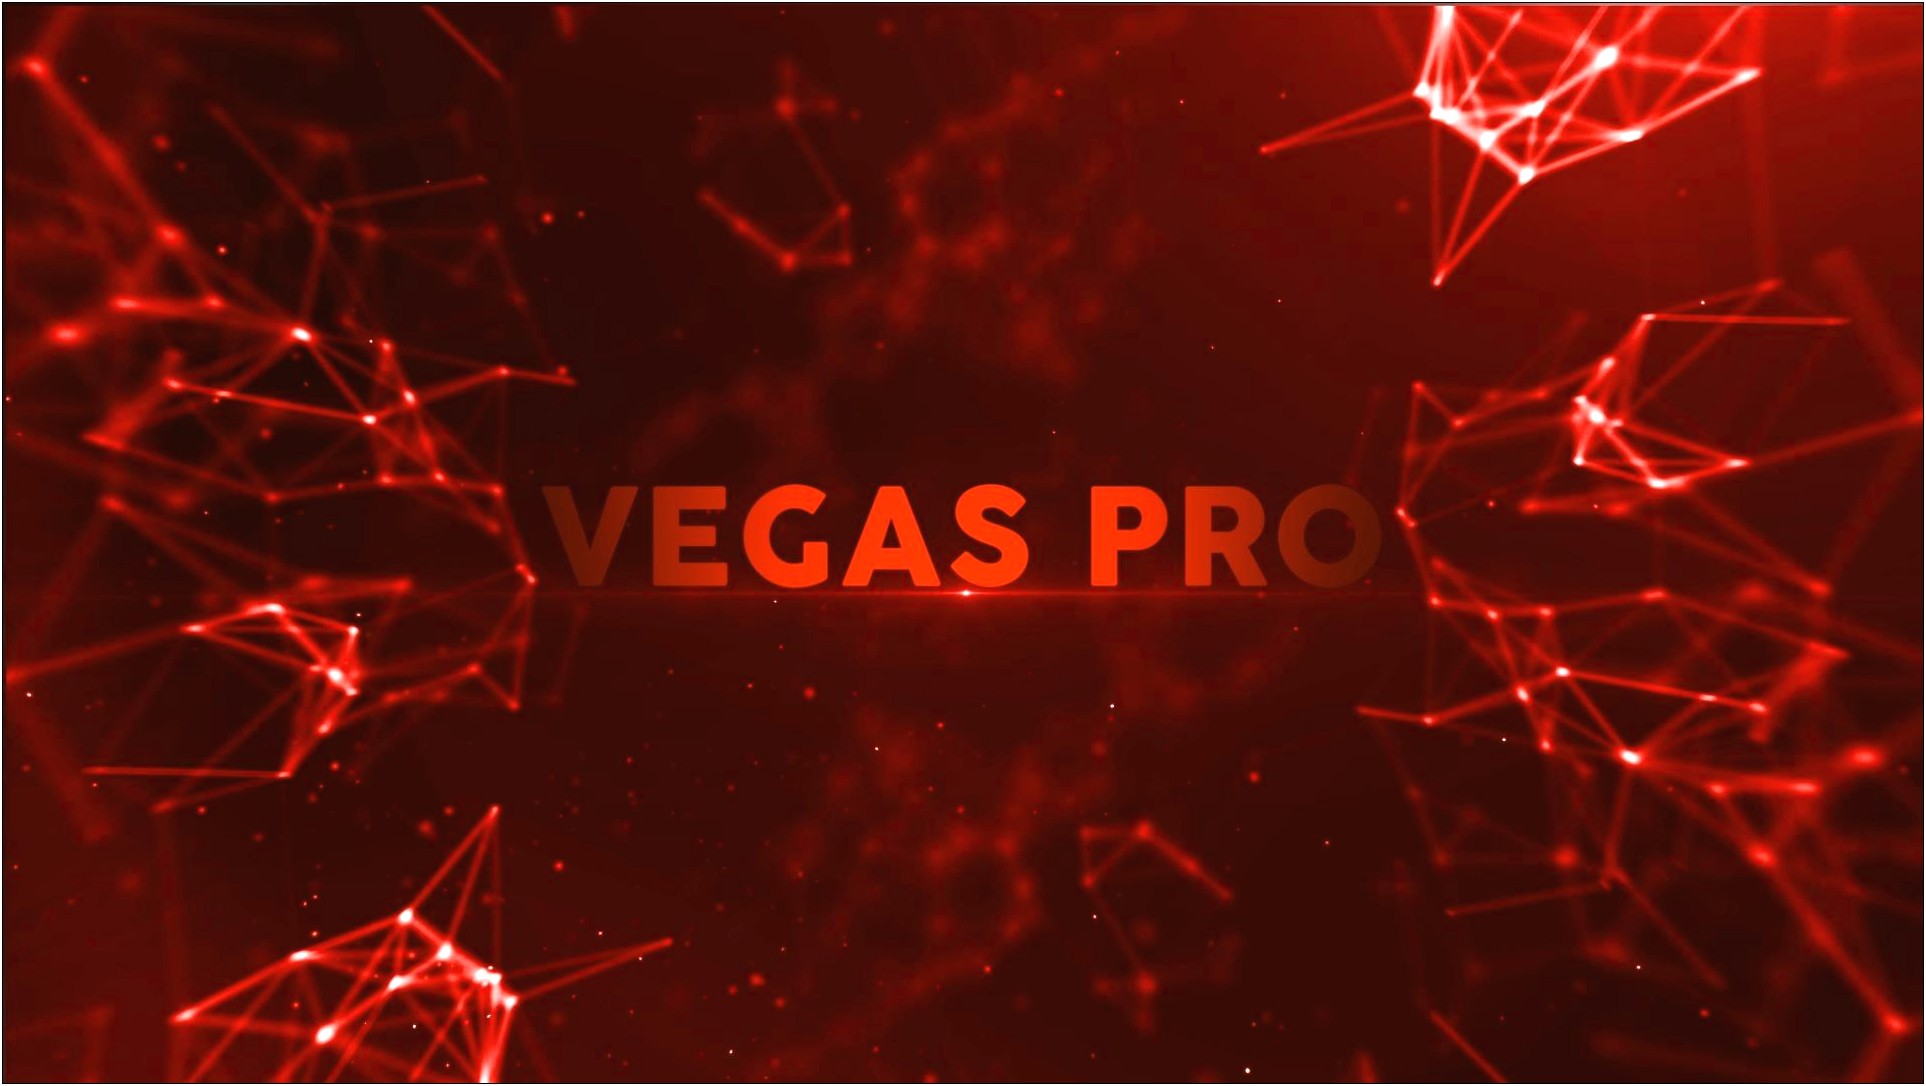 Sony Vegas Pro 13 Slideshow Template Free